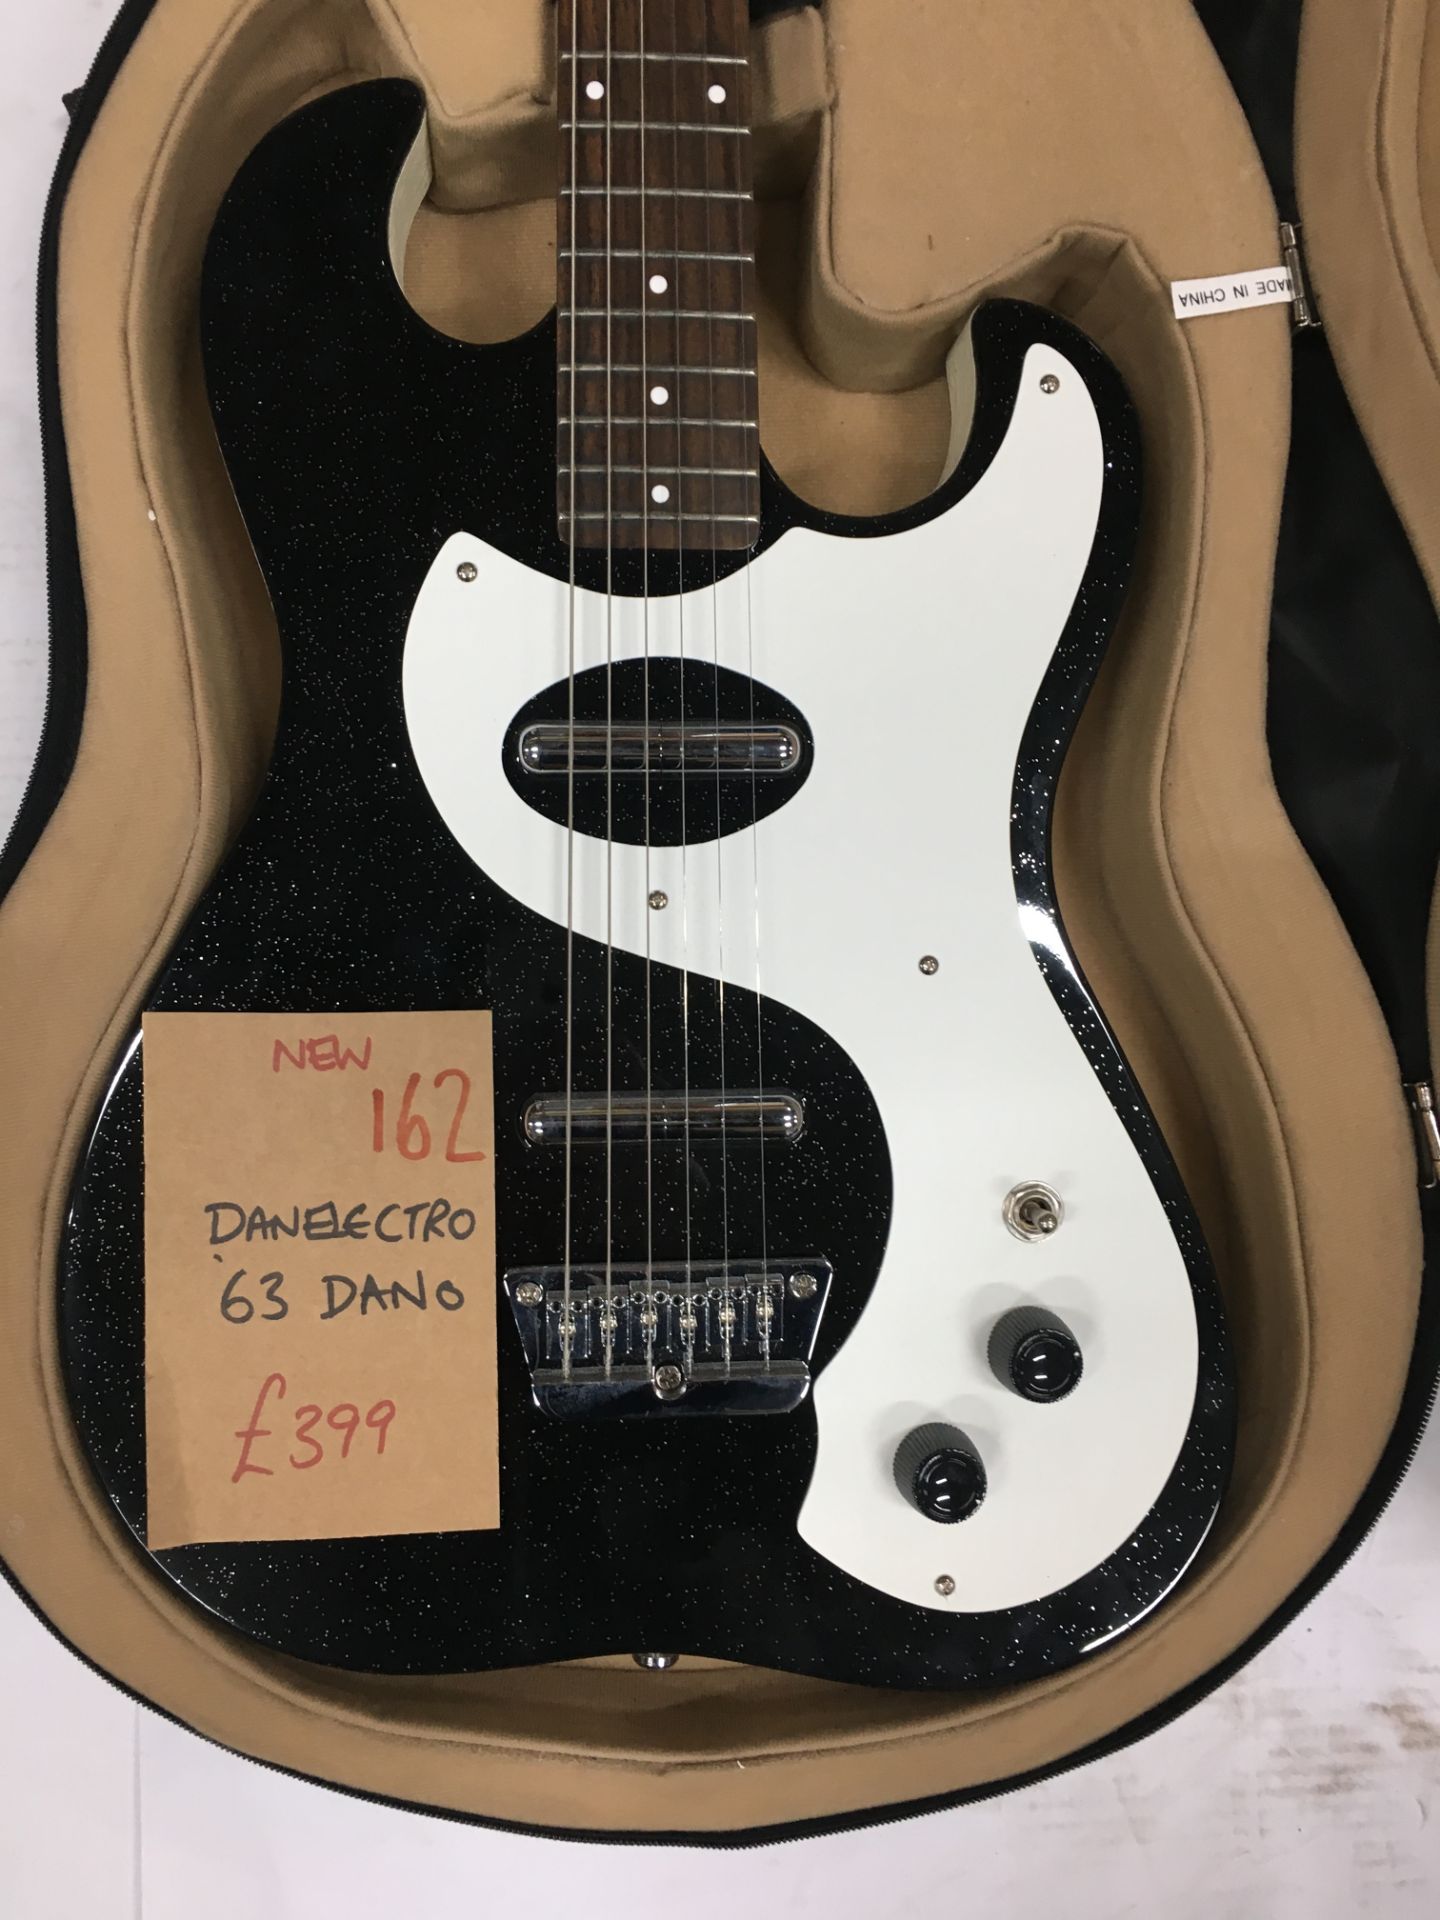 Danelectro '63 Dano Electric Guitar in Black Sparkle | RRP £399 - Image 3 of 4